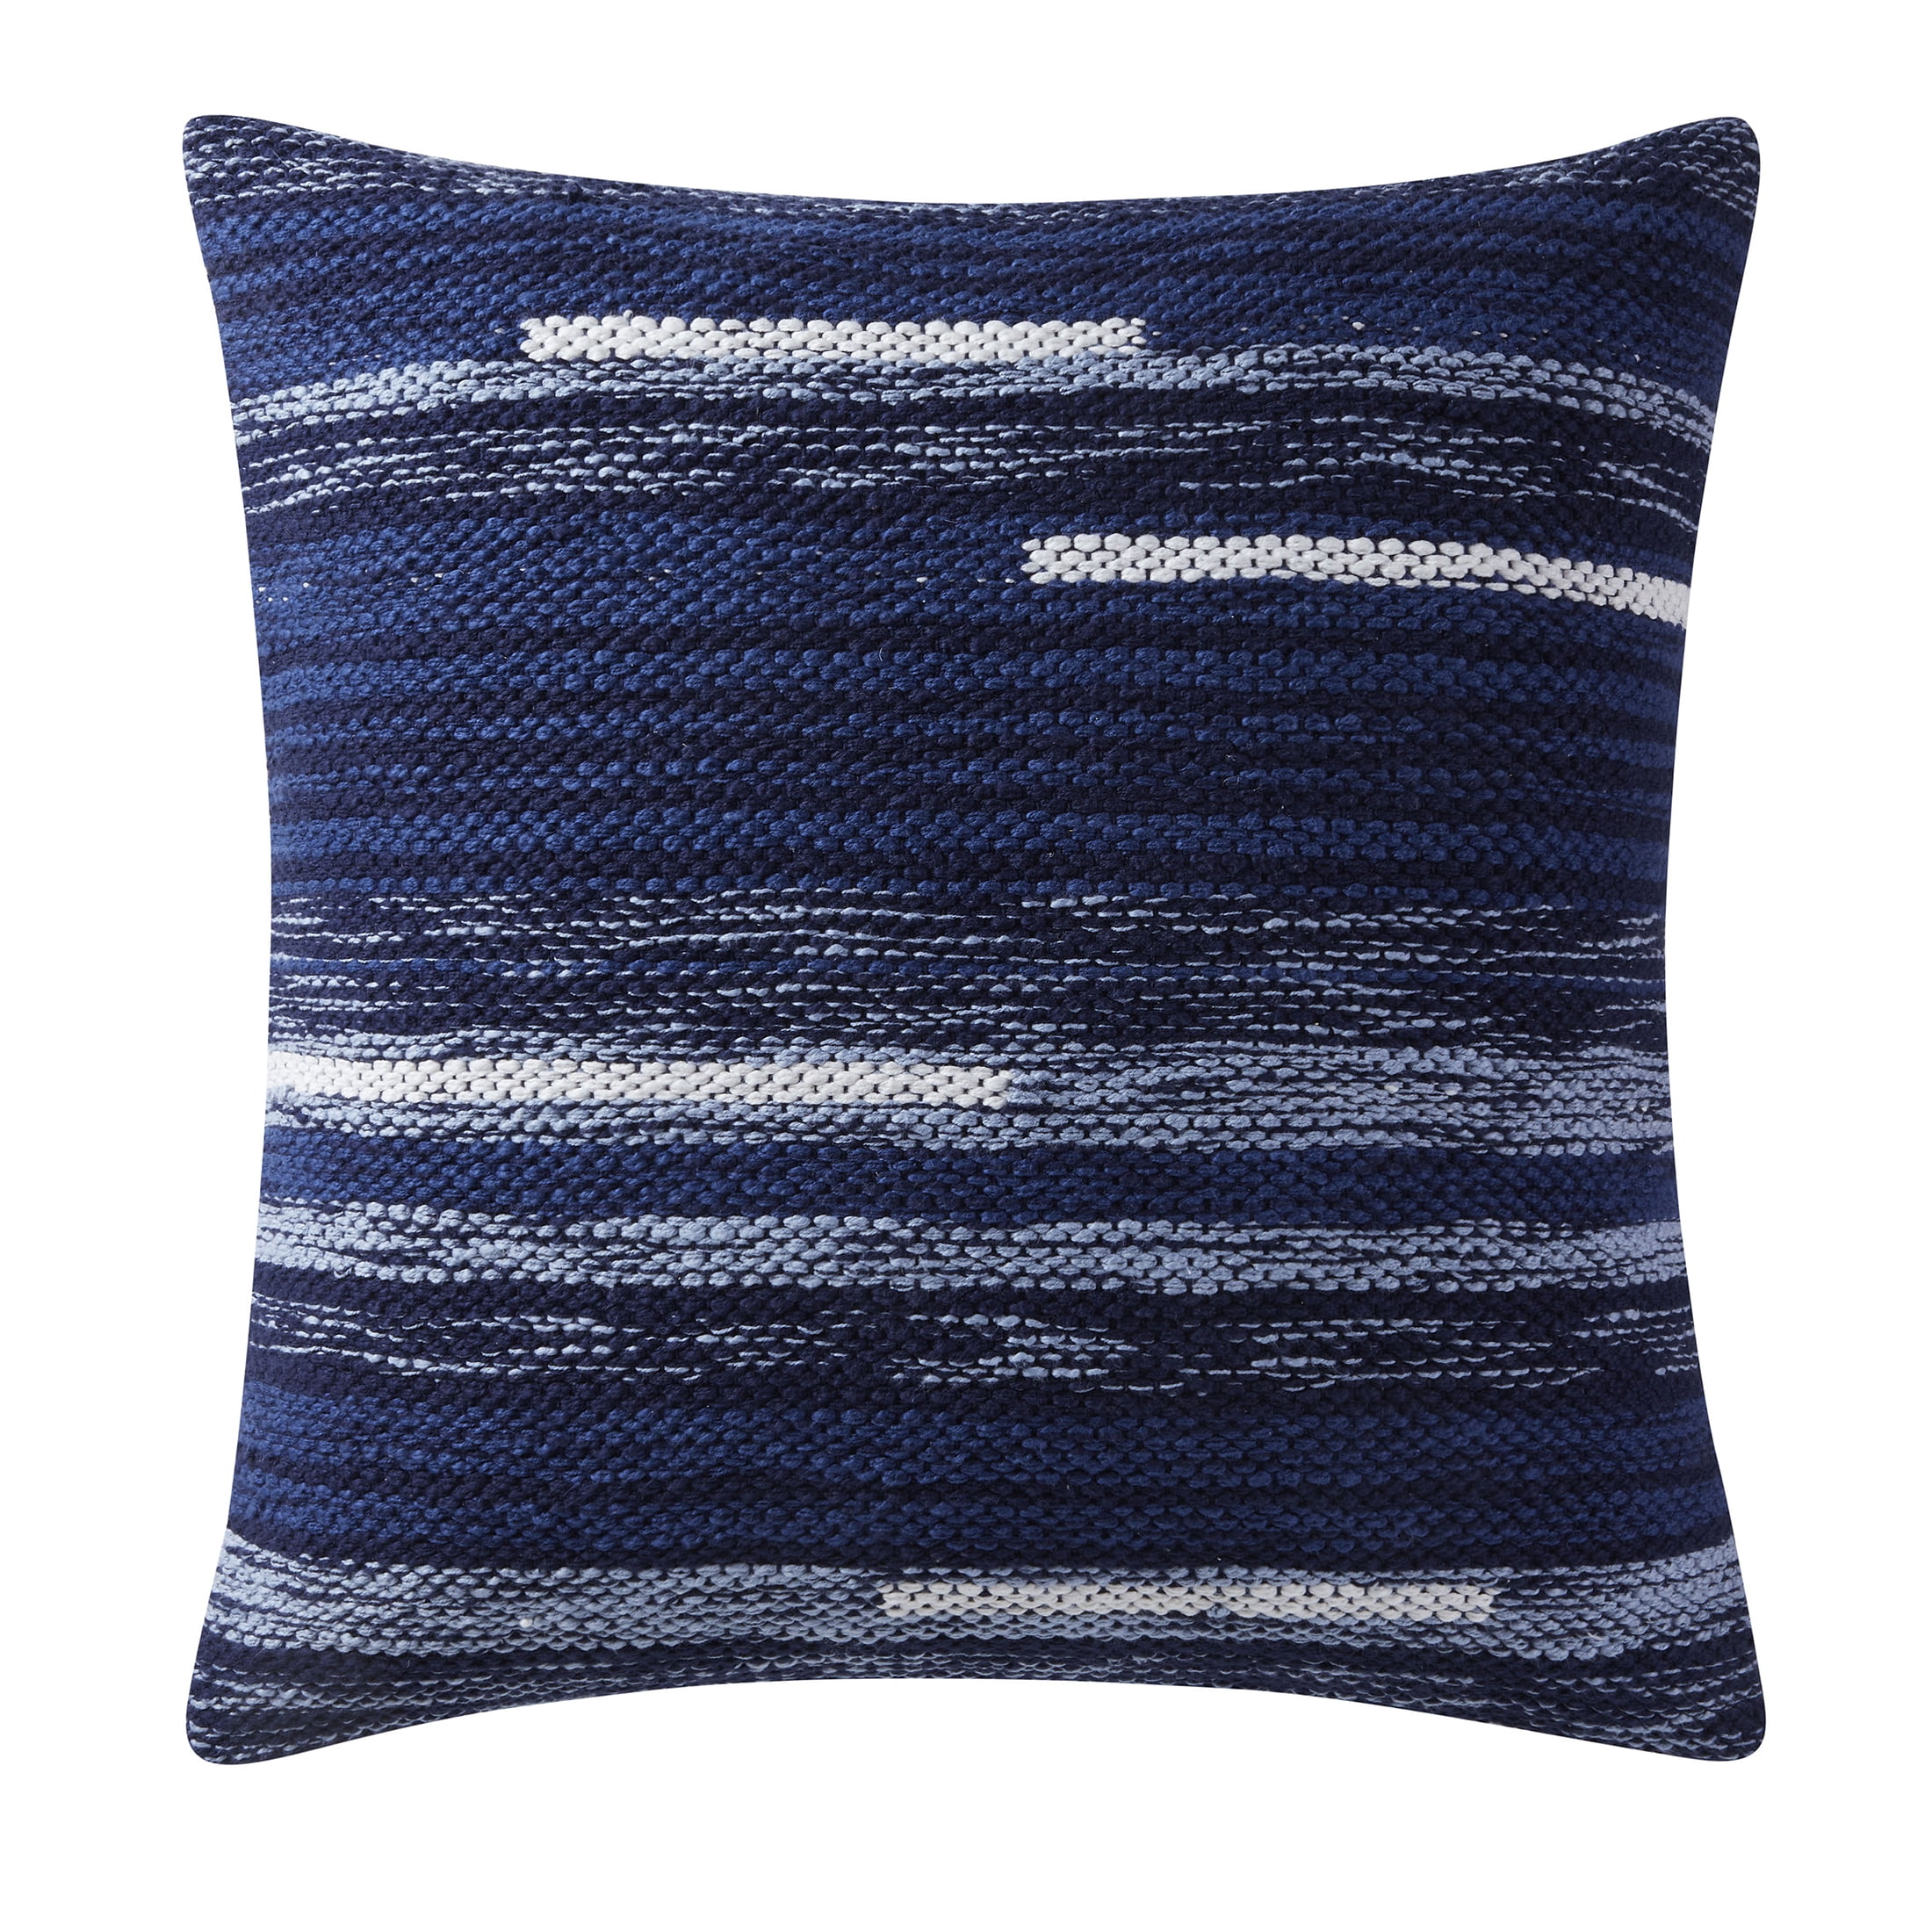 One Big Granny Square Pillow Using Blue Sky Fibers Organic Cotton Wors –  Churchmouse Yarns & Teas